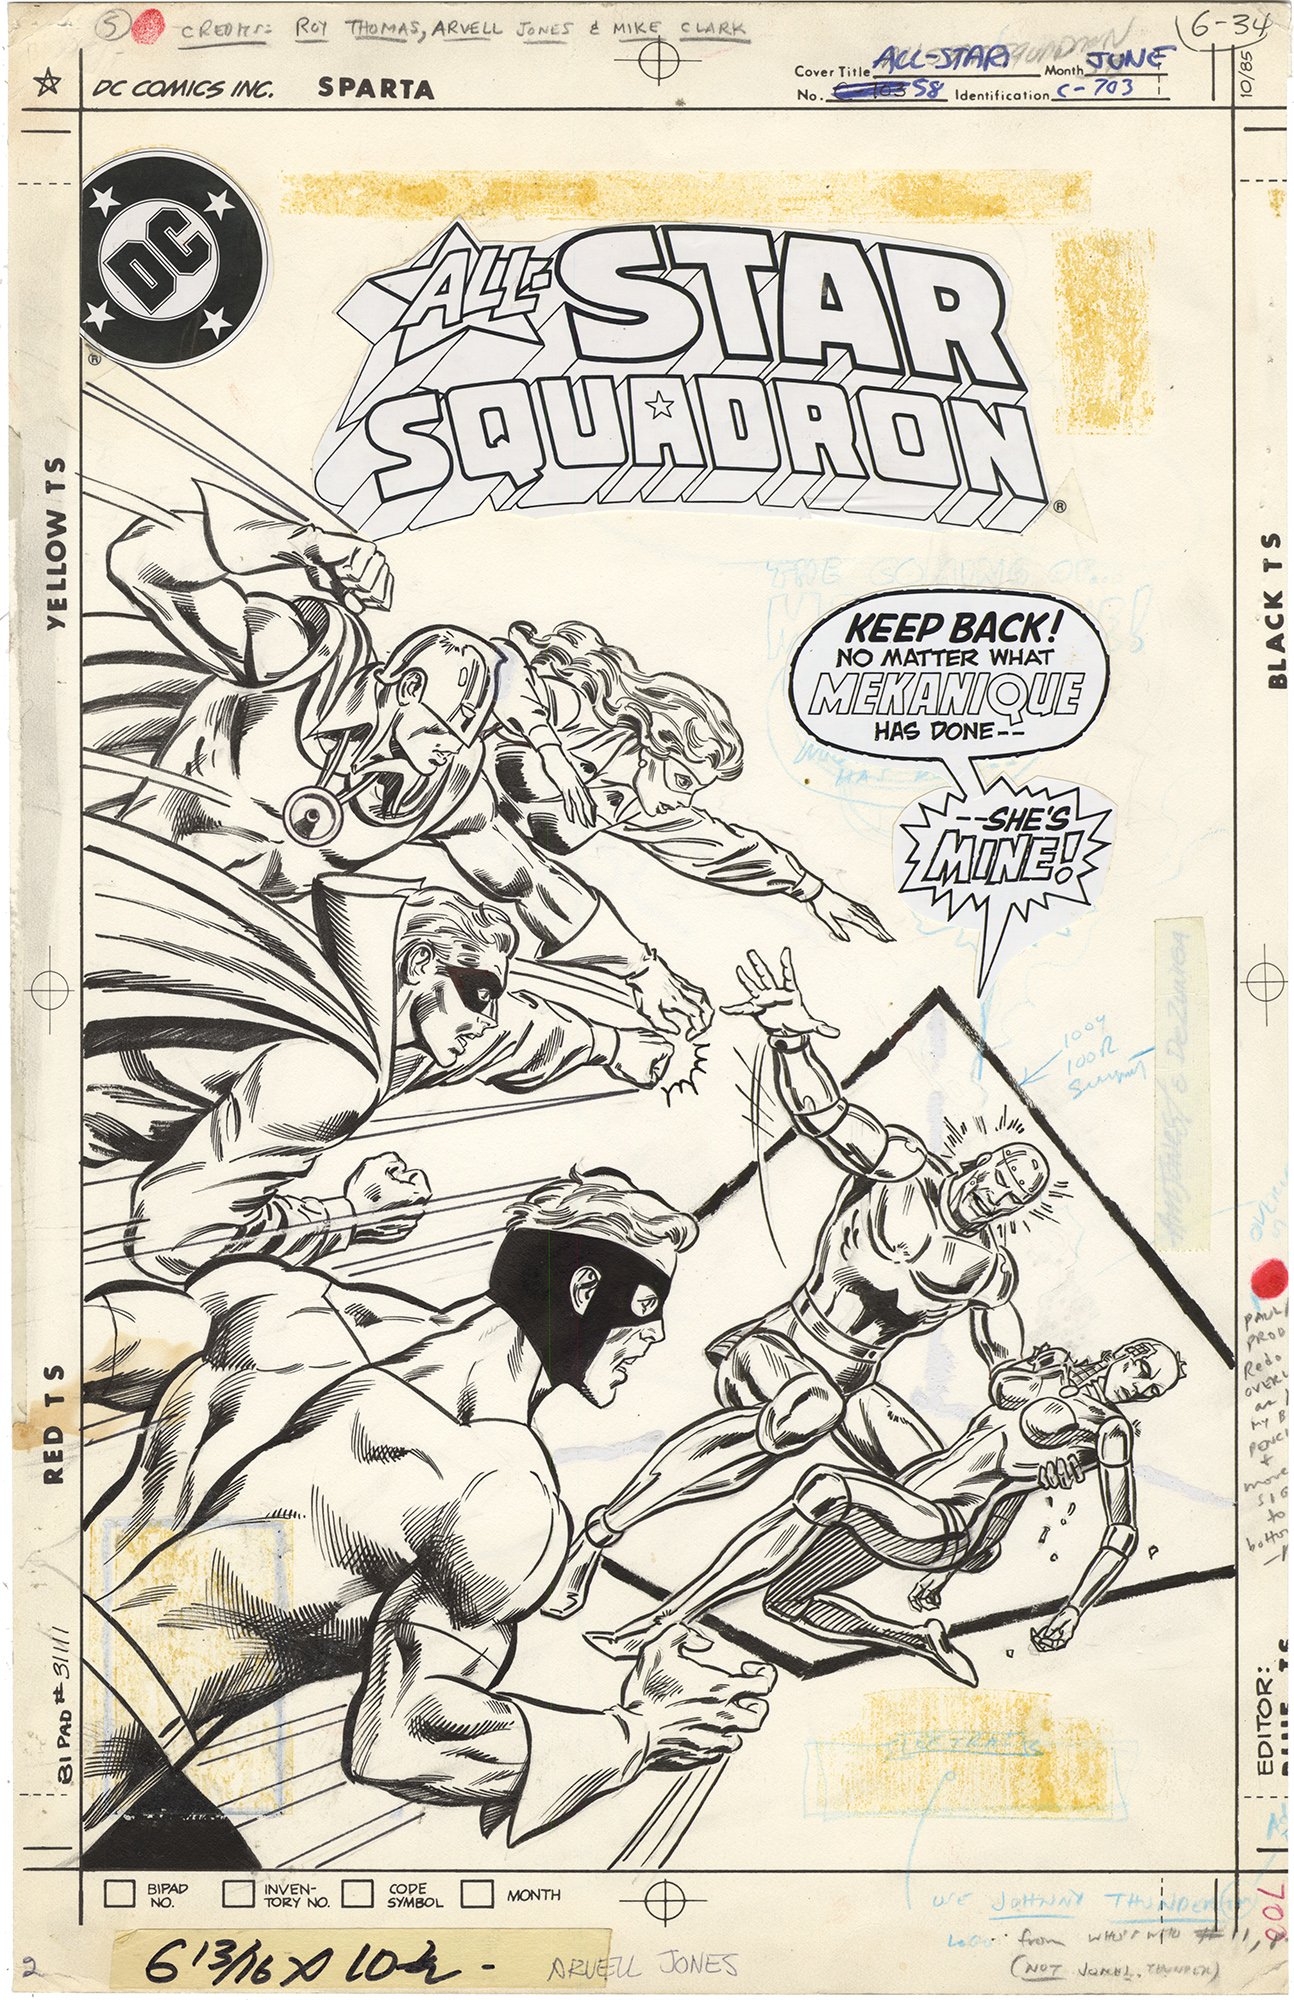 All-Star Squadron #58 Cover